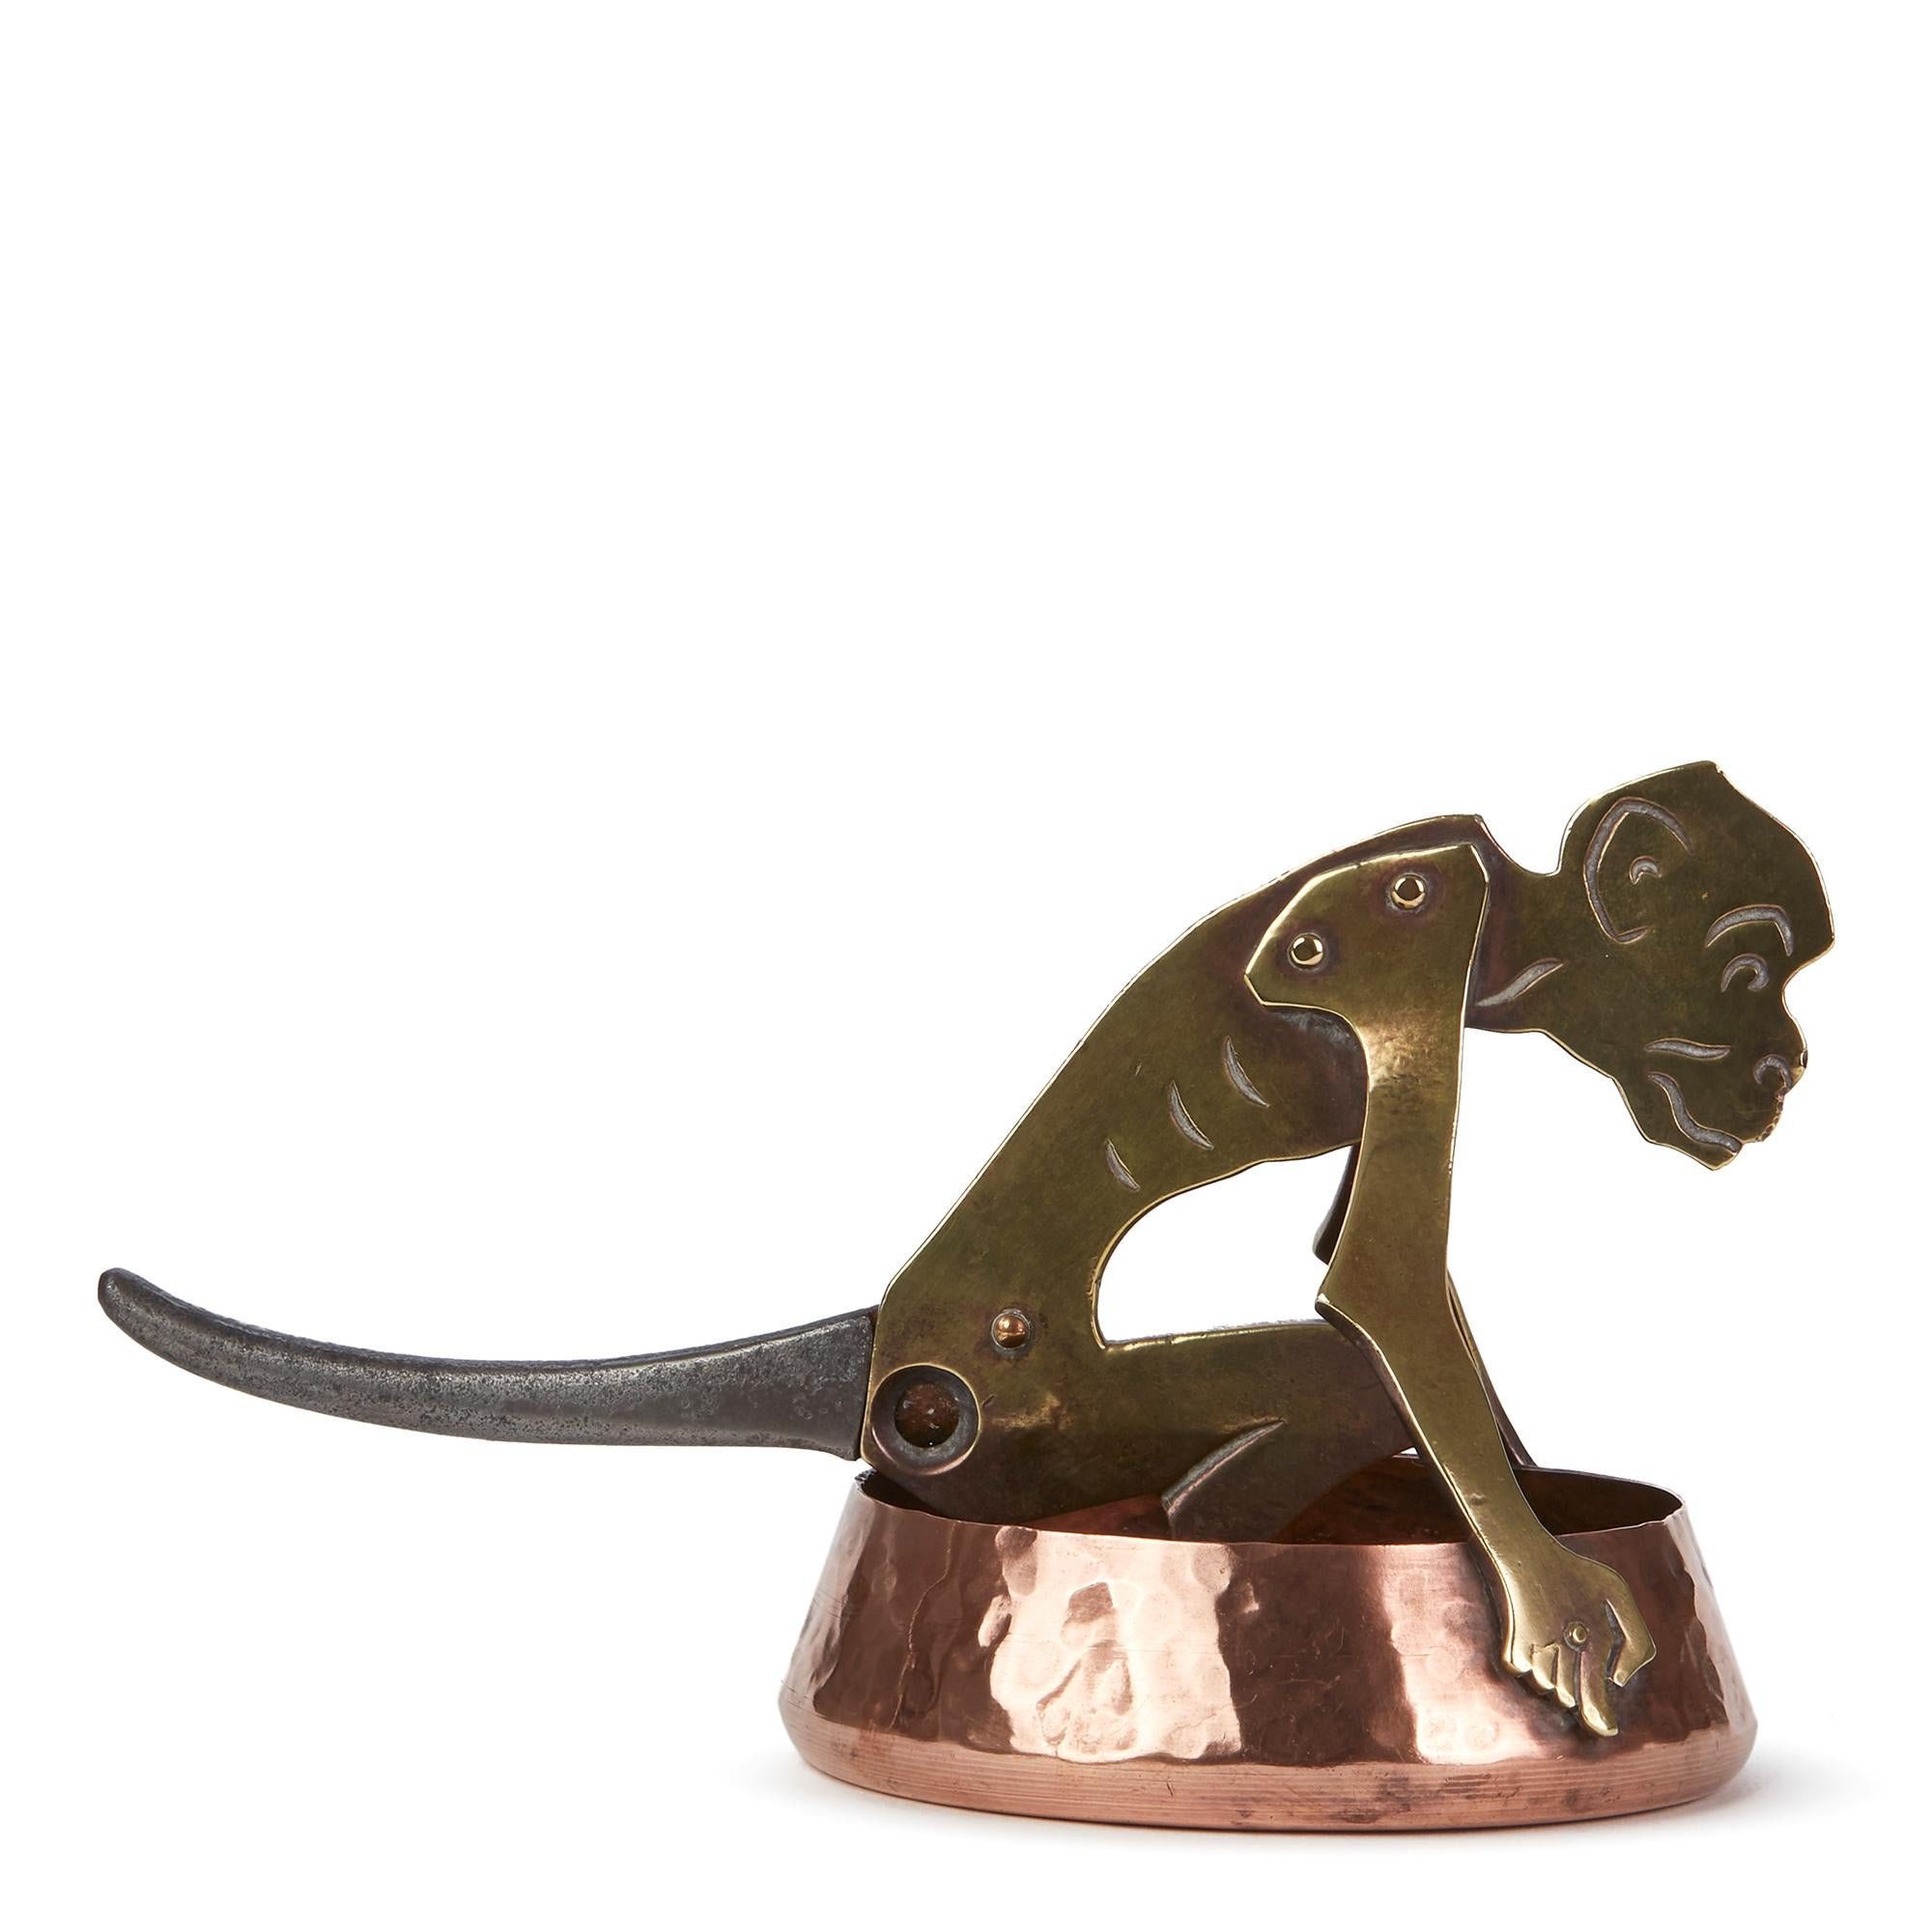 Ignatius Taschner Jugendstil Brass and Copper Monkey Cheroot Cutter, circa 1900 For Sale 2